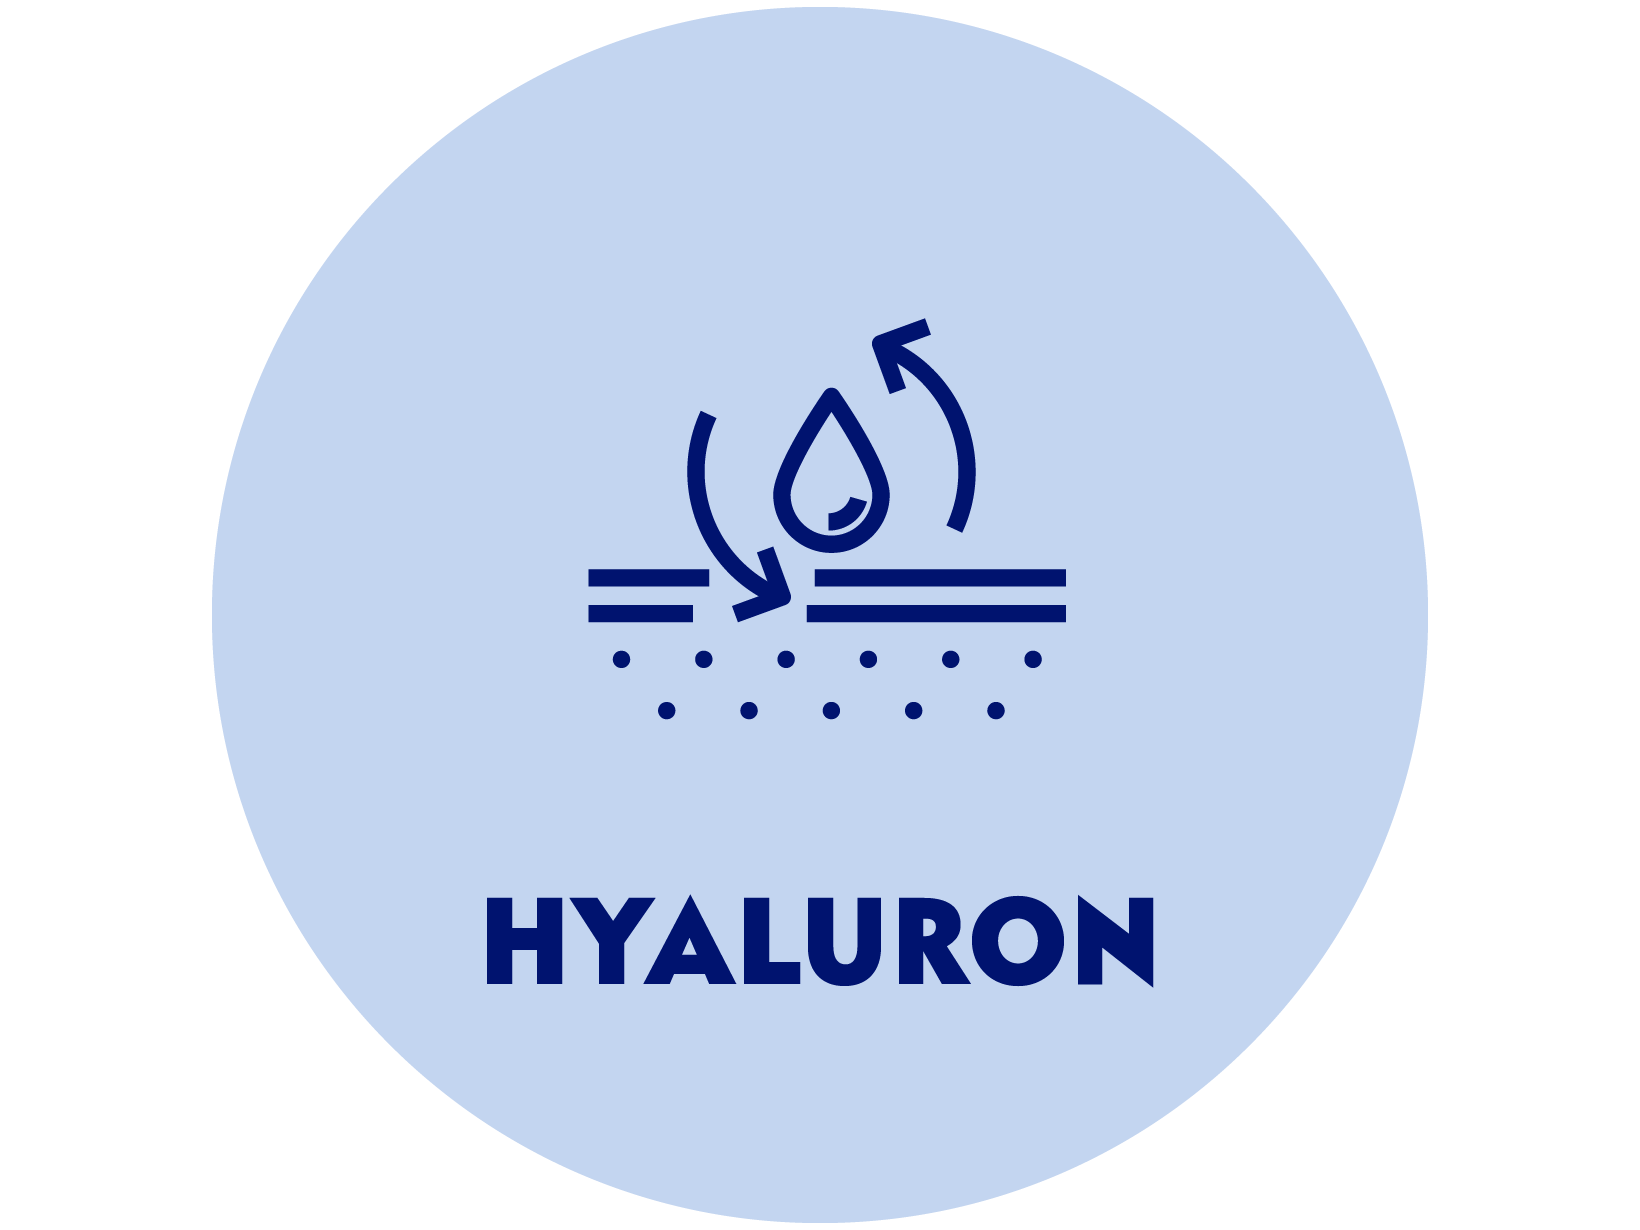 L’actif Hyaluron